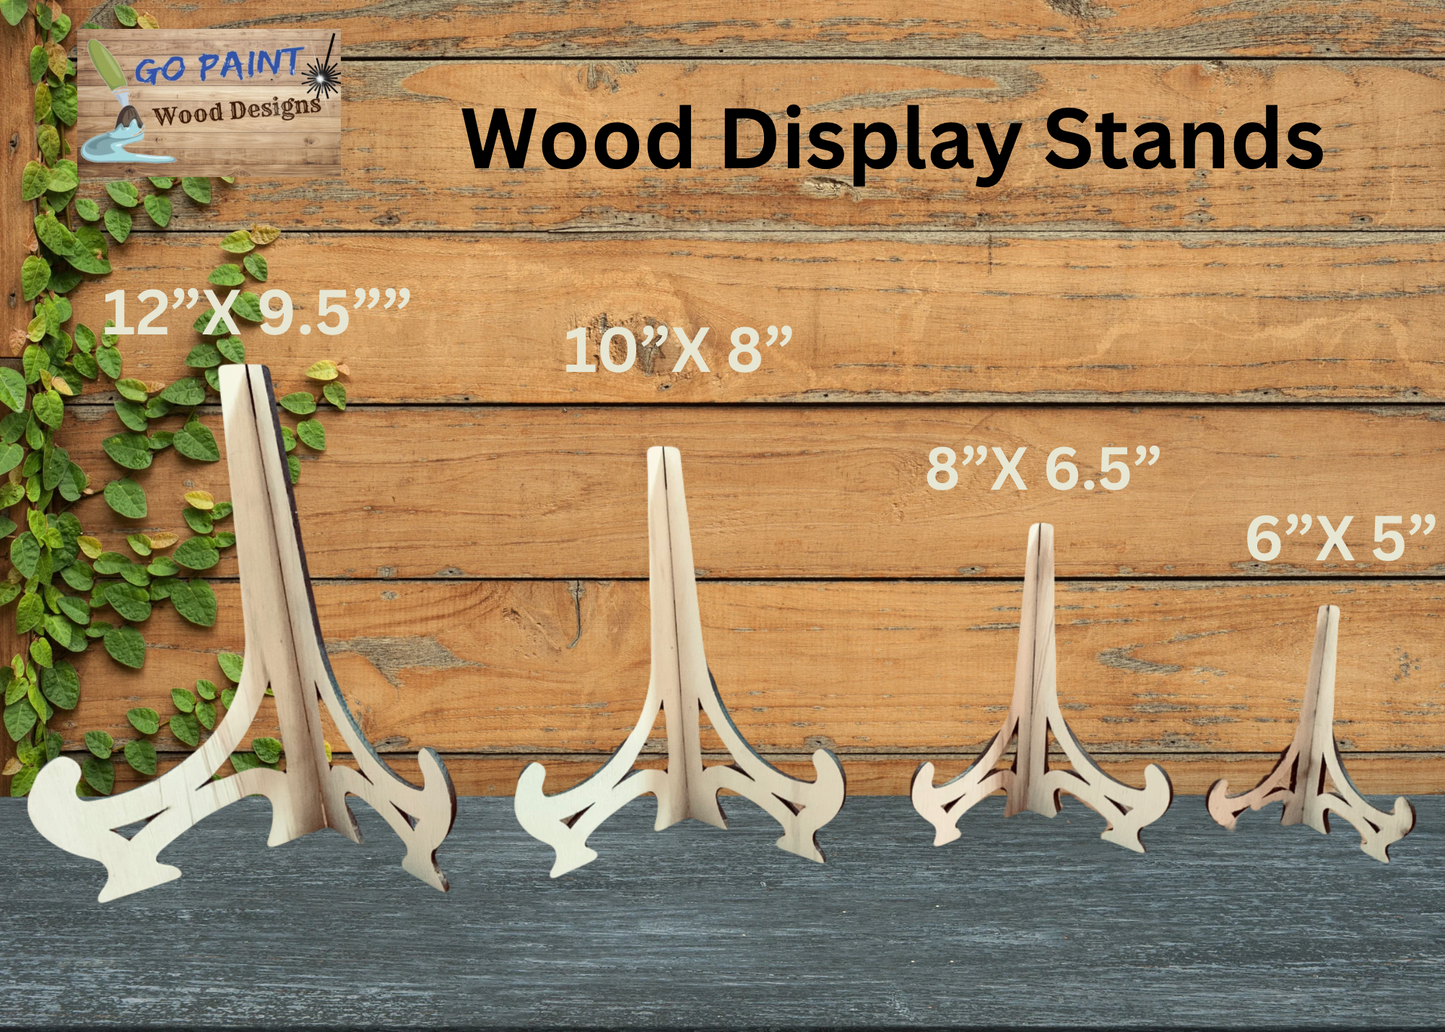 Wood Display Stand 6”X 5”